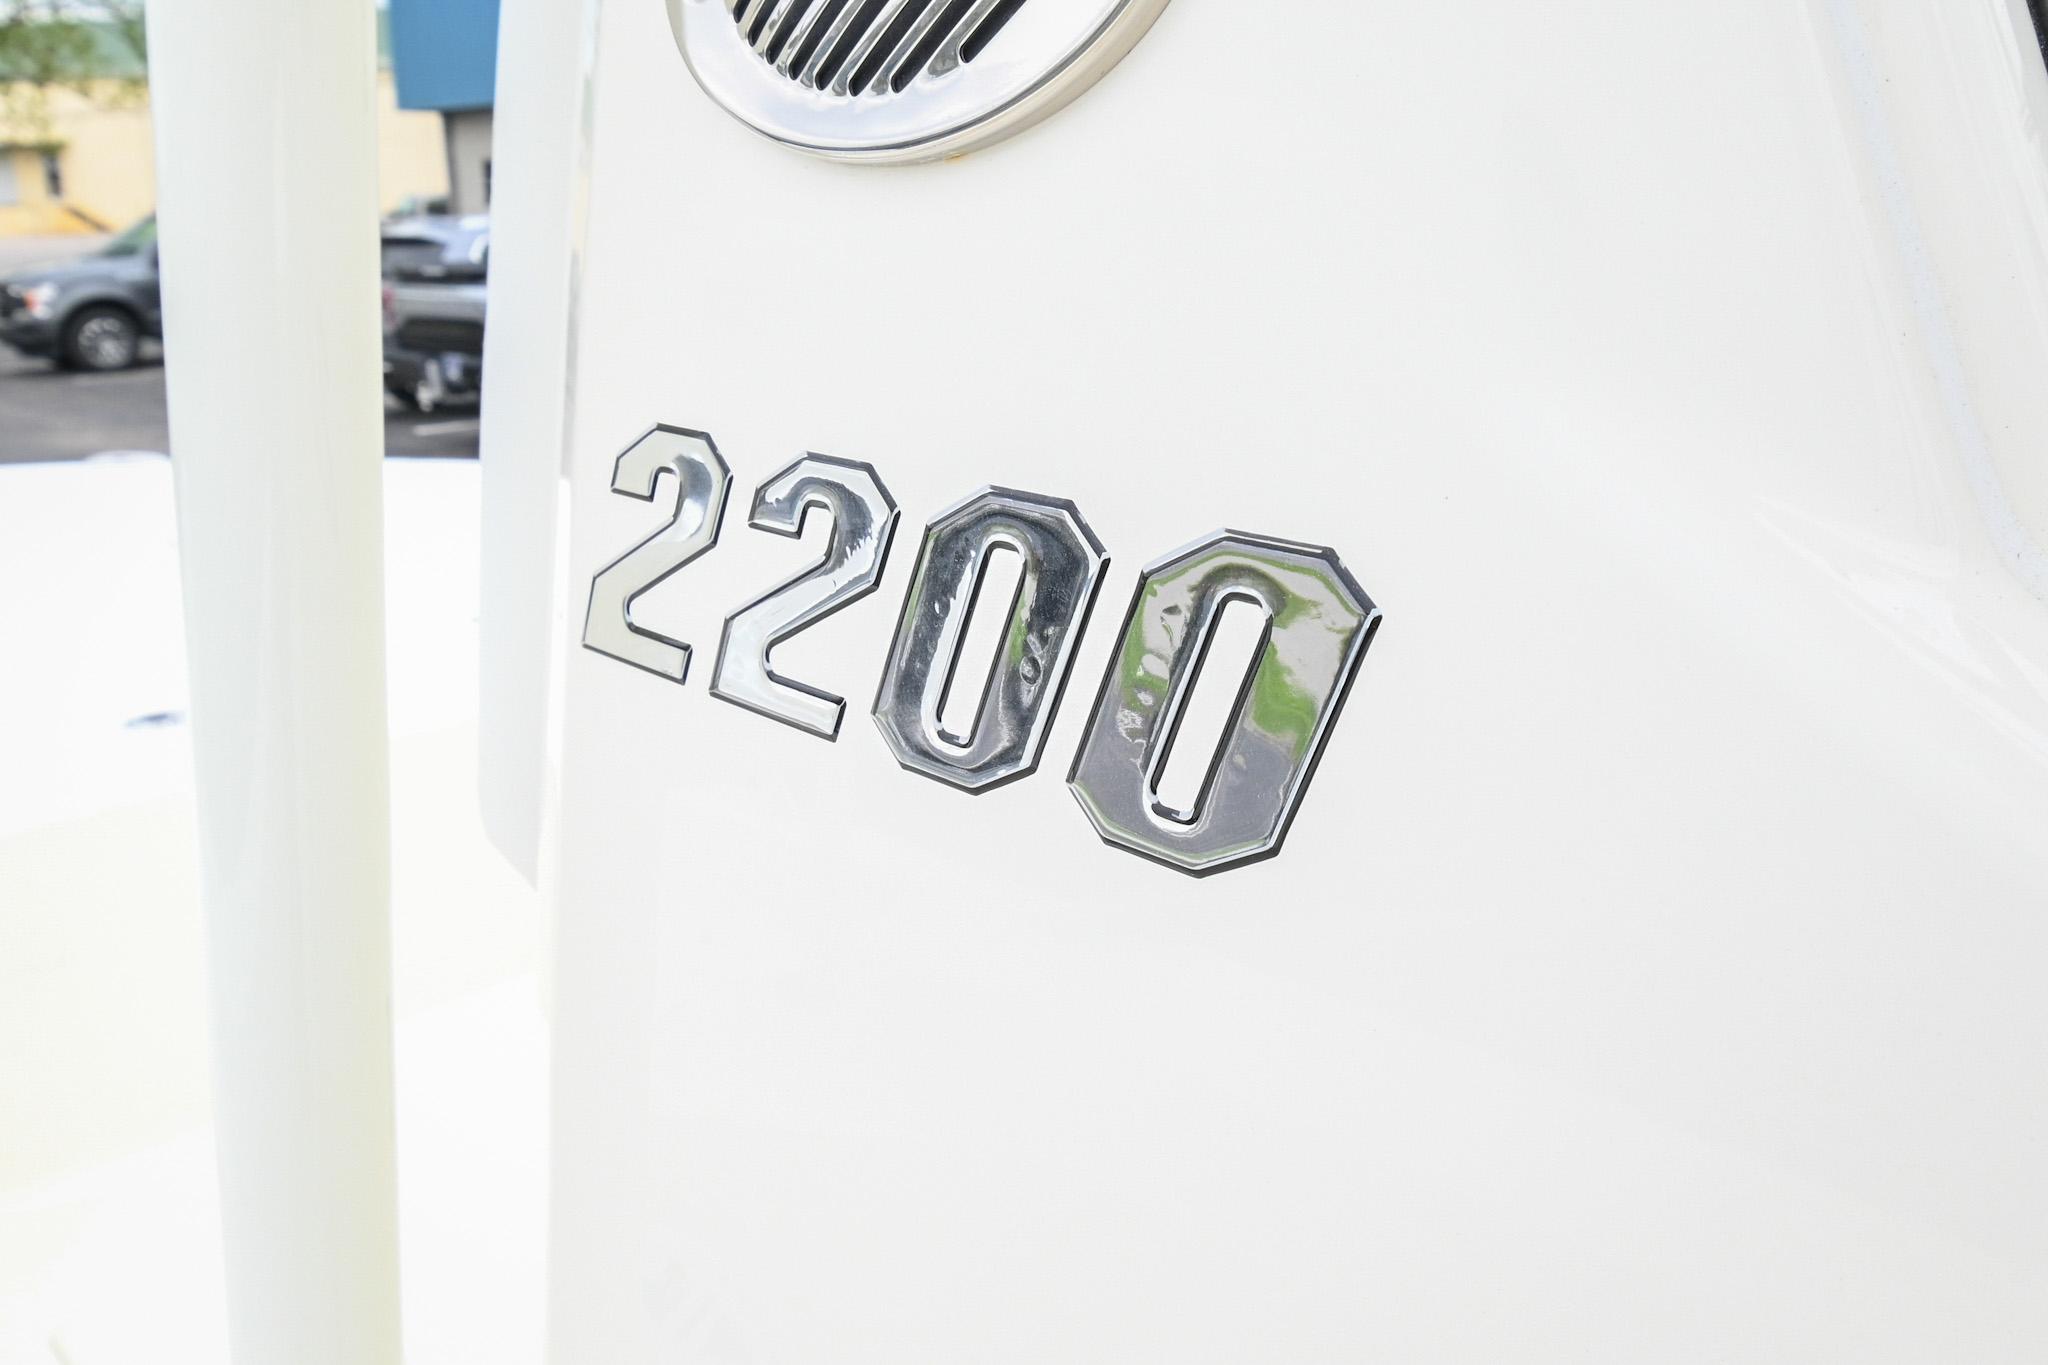 2024 Pathfinder 2200 TRS